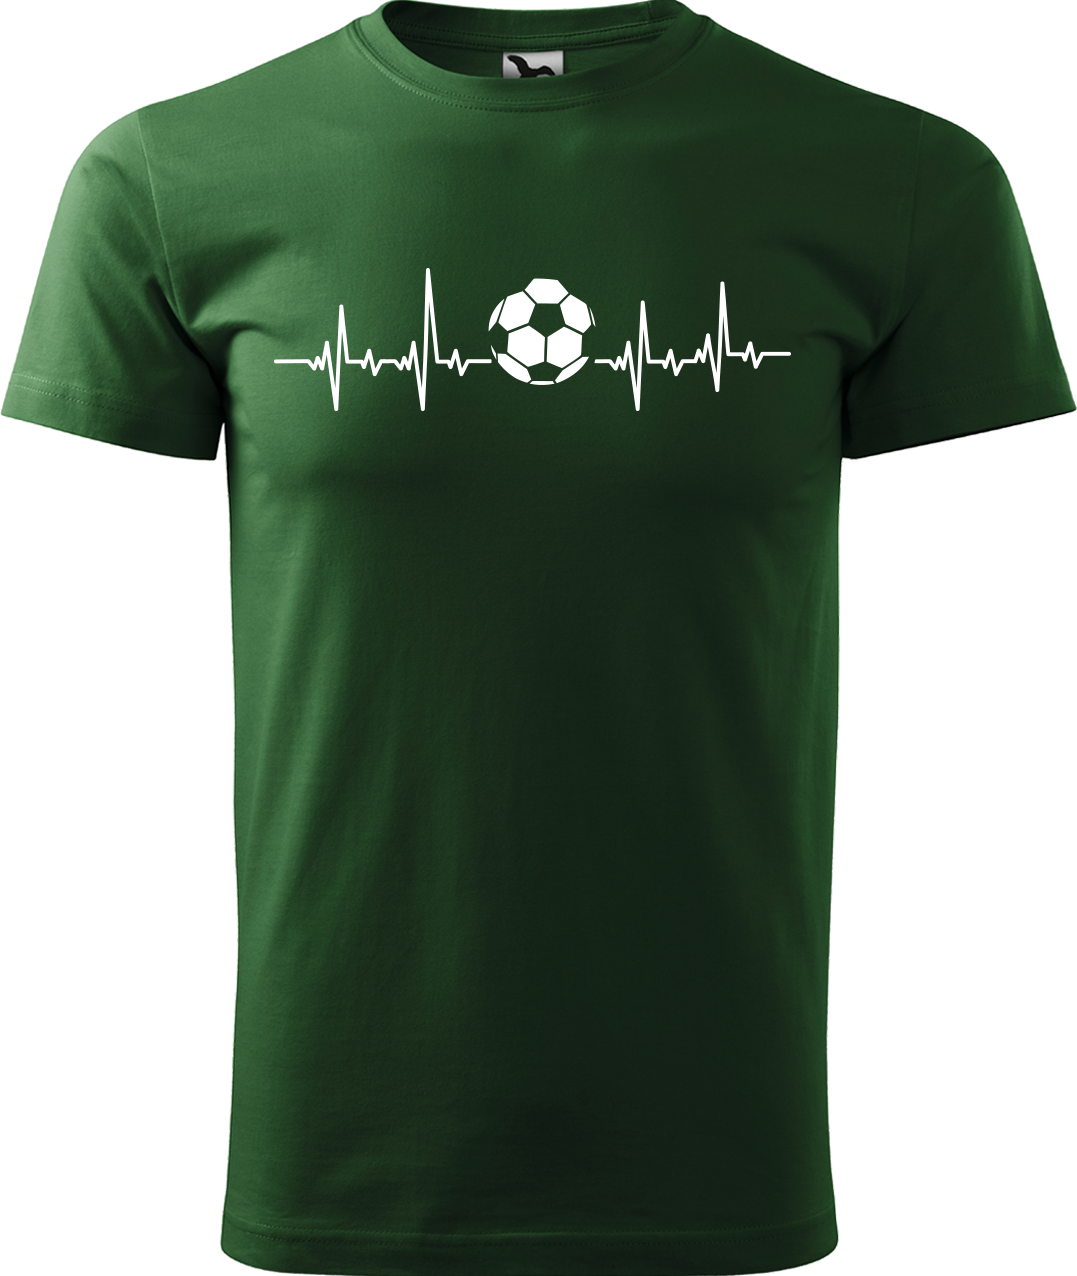 Tričko pro fotbalistu - Fotbalistův kardiogram Velikost: L, Barva: Lahvově zelená (06)